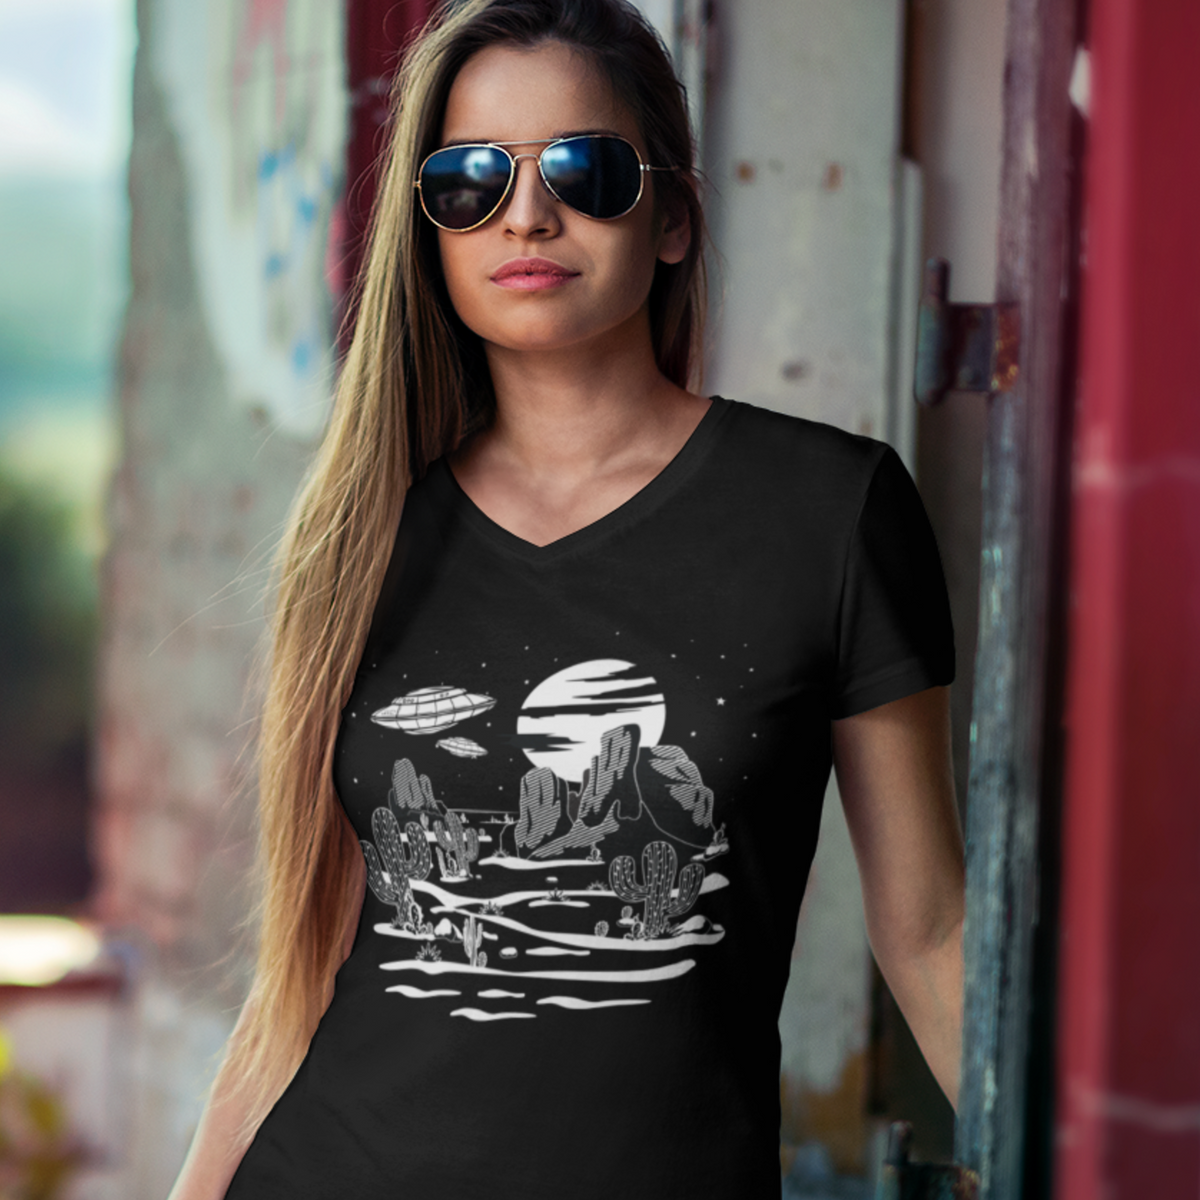 UFO Desert Camping Adventure Shirt | Great Outdoors Camping Gift | Unisex Jersey V-neck T-shirt